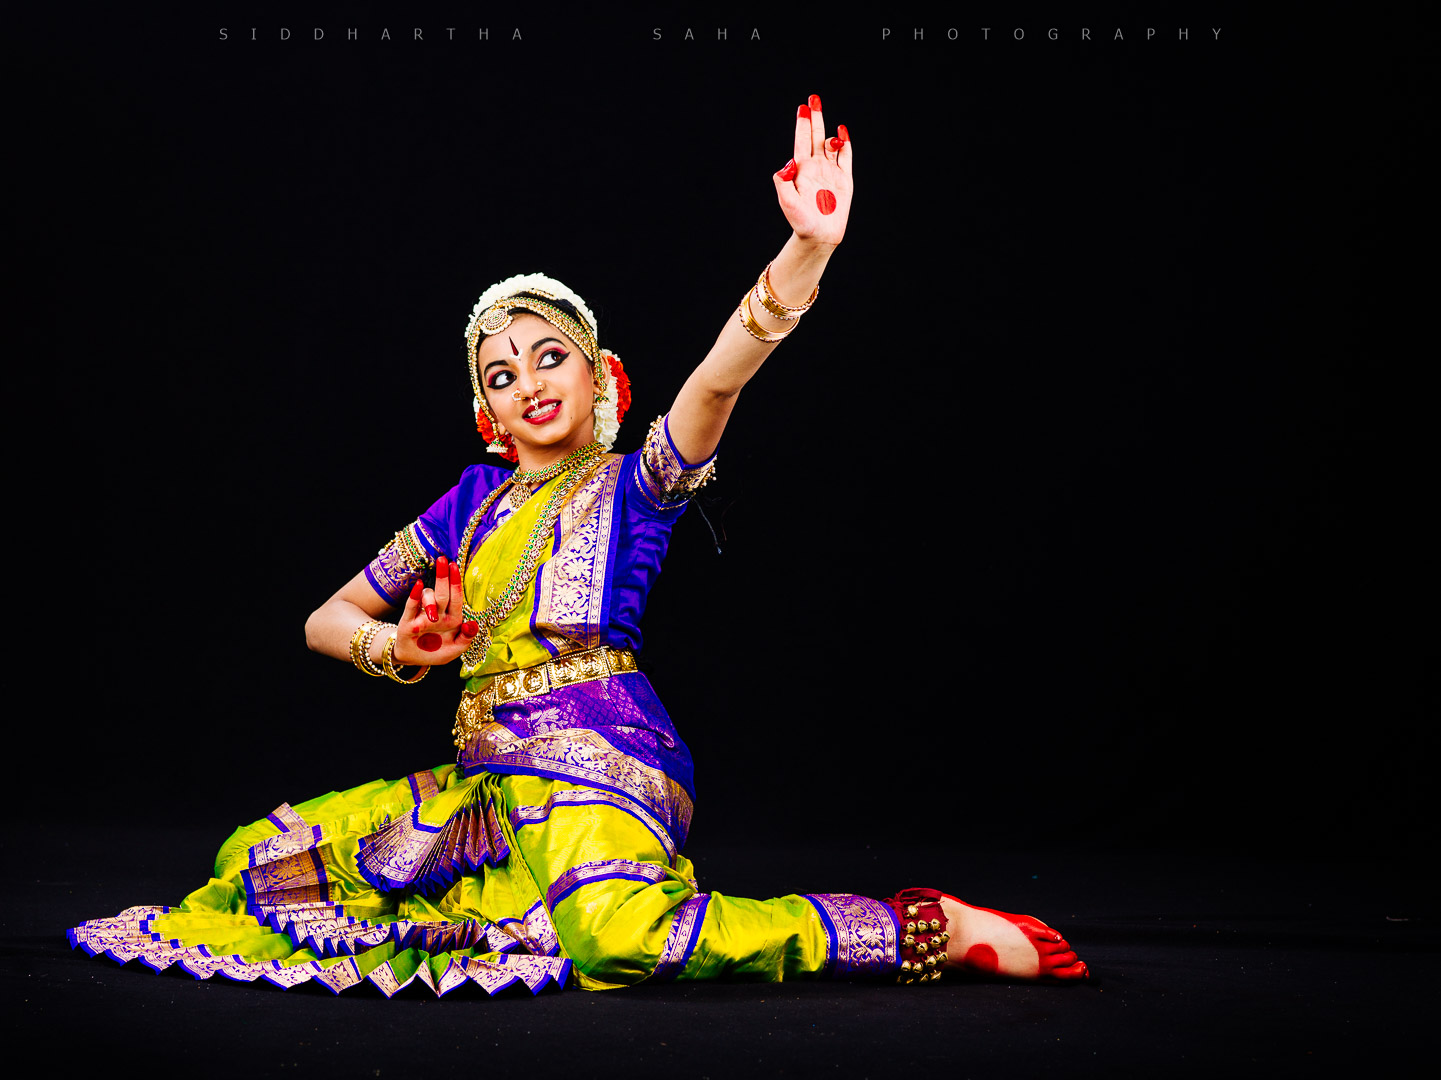 Siddhartha Saha Photography (www.siddphoto.com)